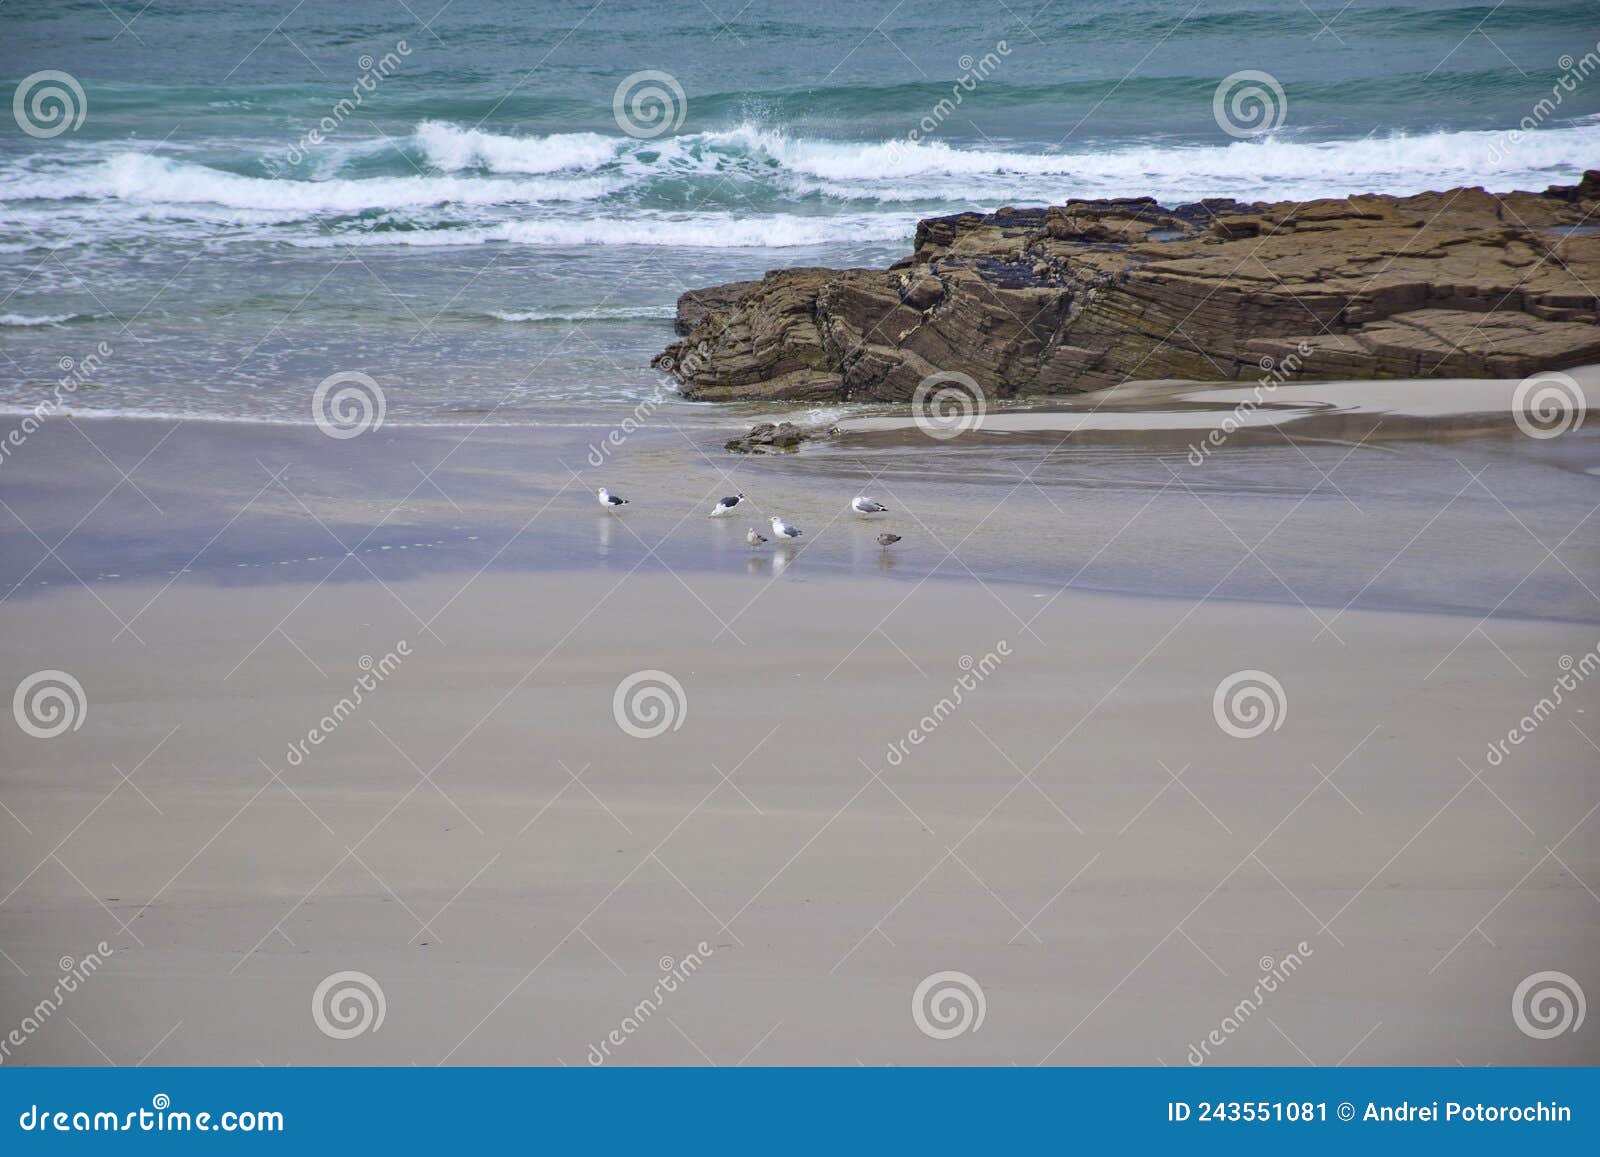 seagulls on a sandy beach. praia de augas santas, ribadeo